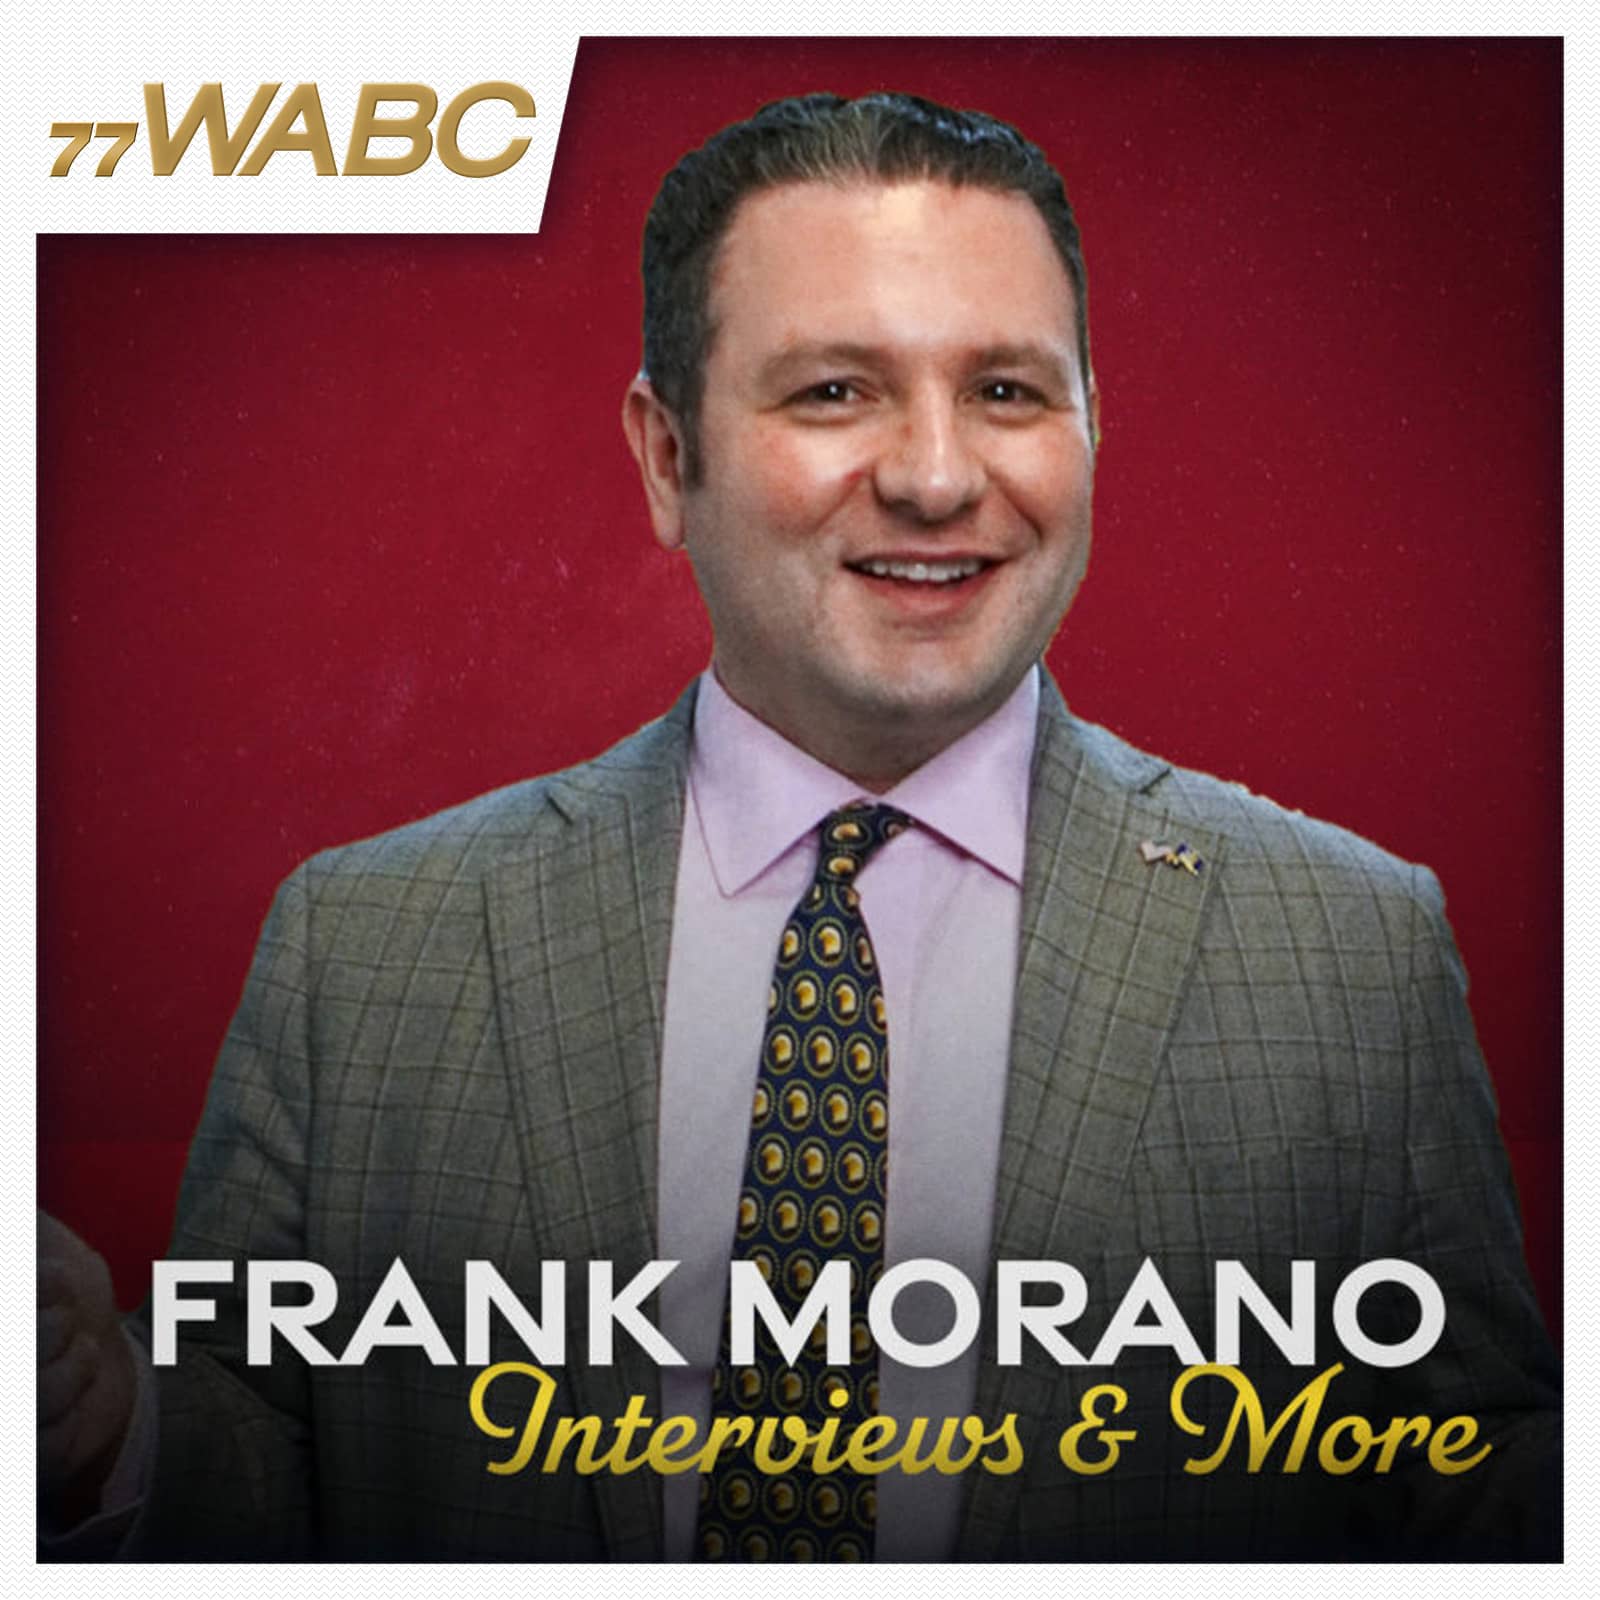 frank-morano-interviews-and-more-podcast-new-logo112548